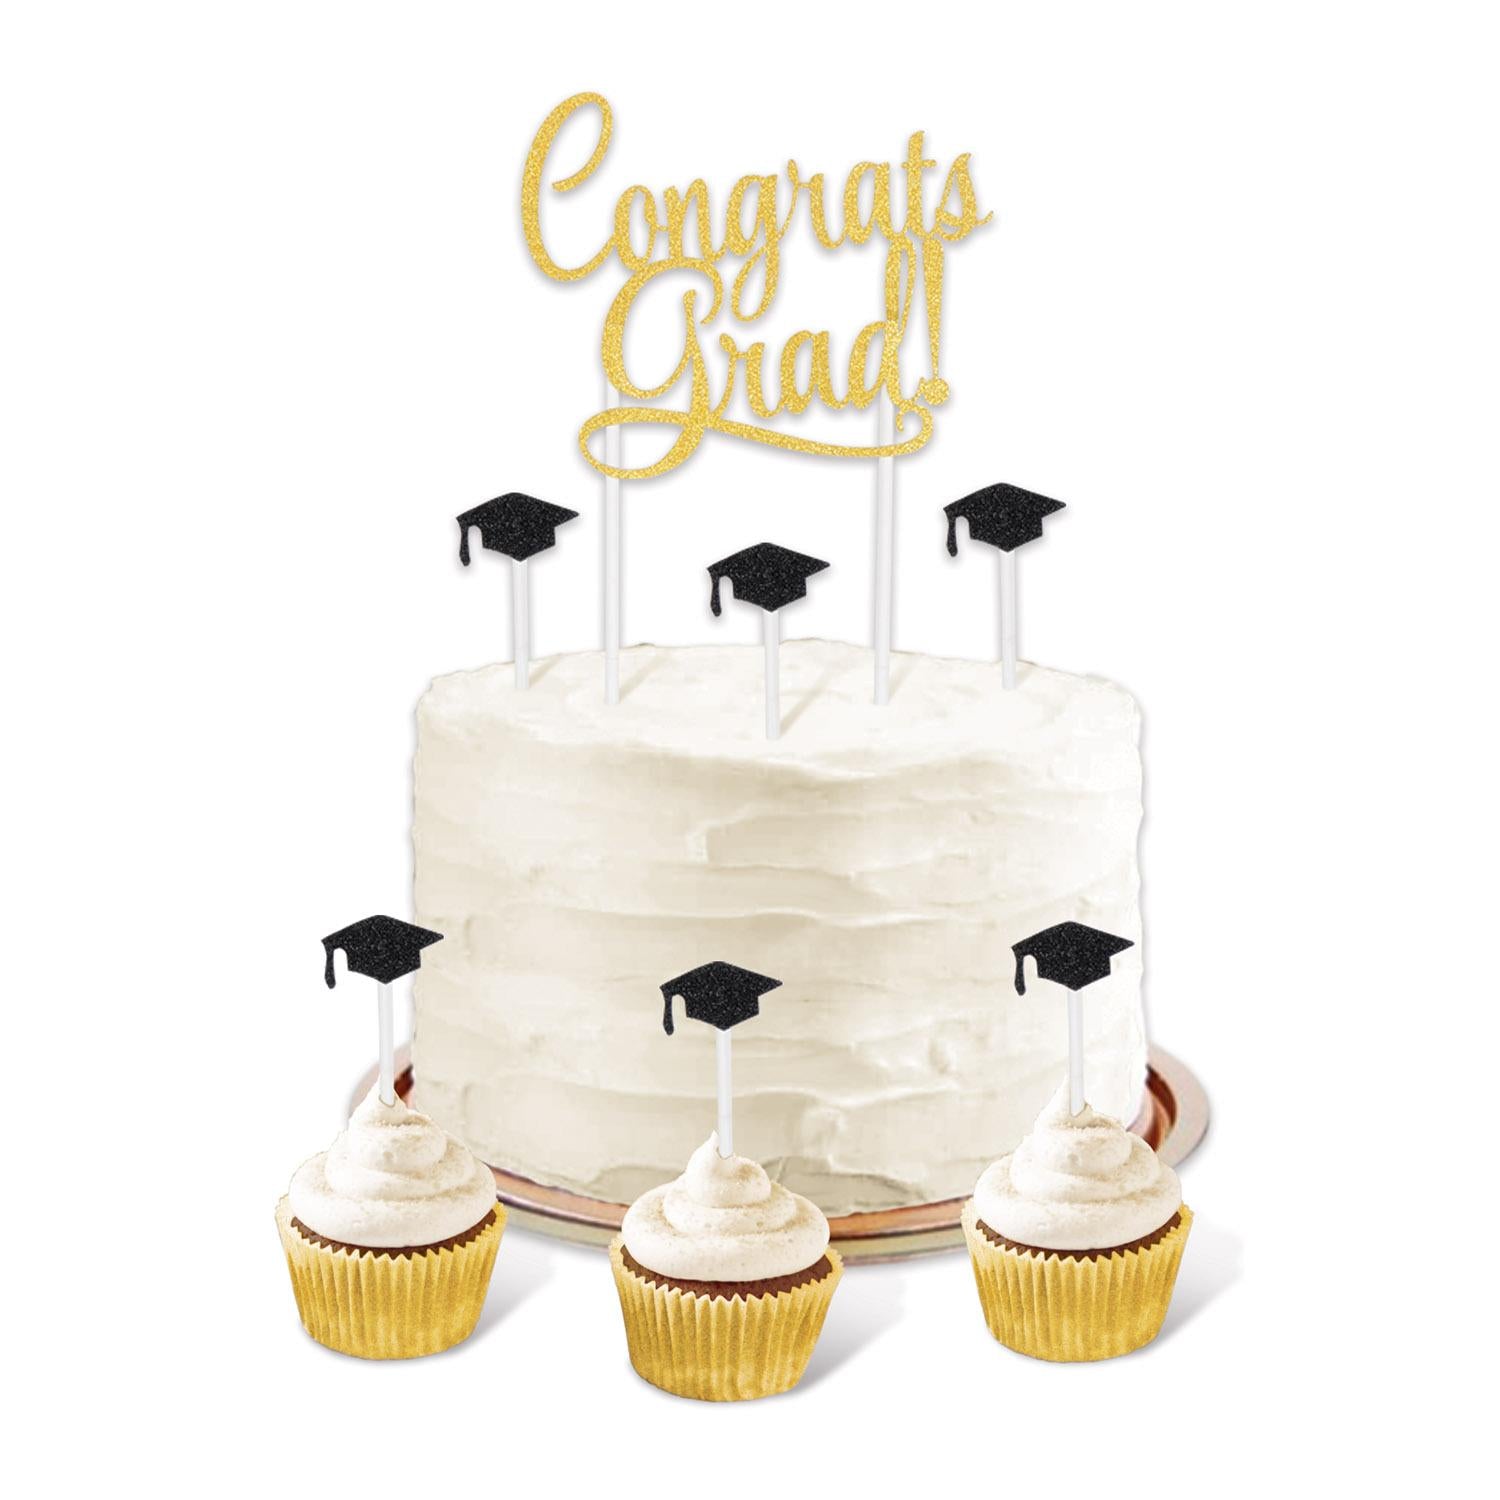 Beistle Congrats Grad! Graduation Party Cake Topper